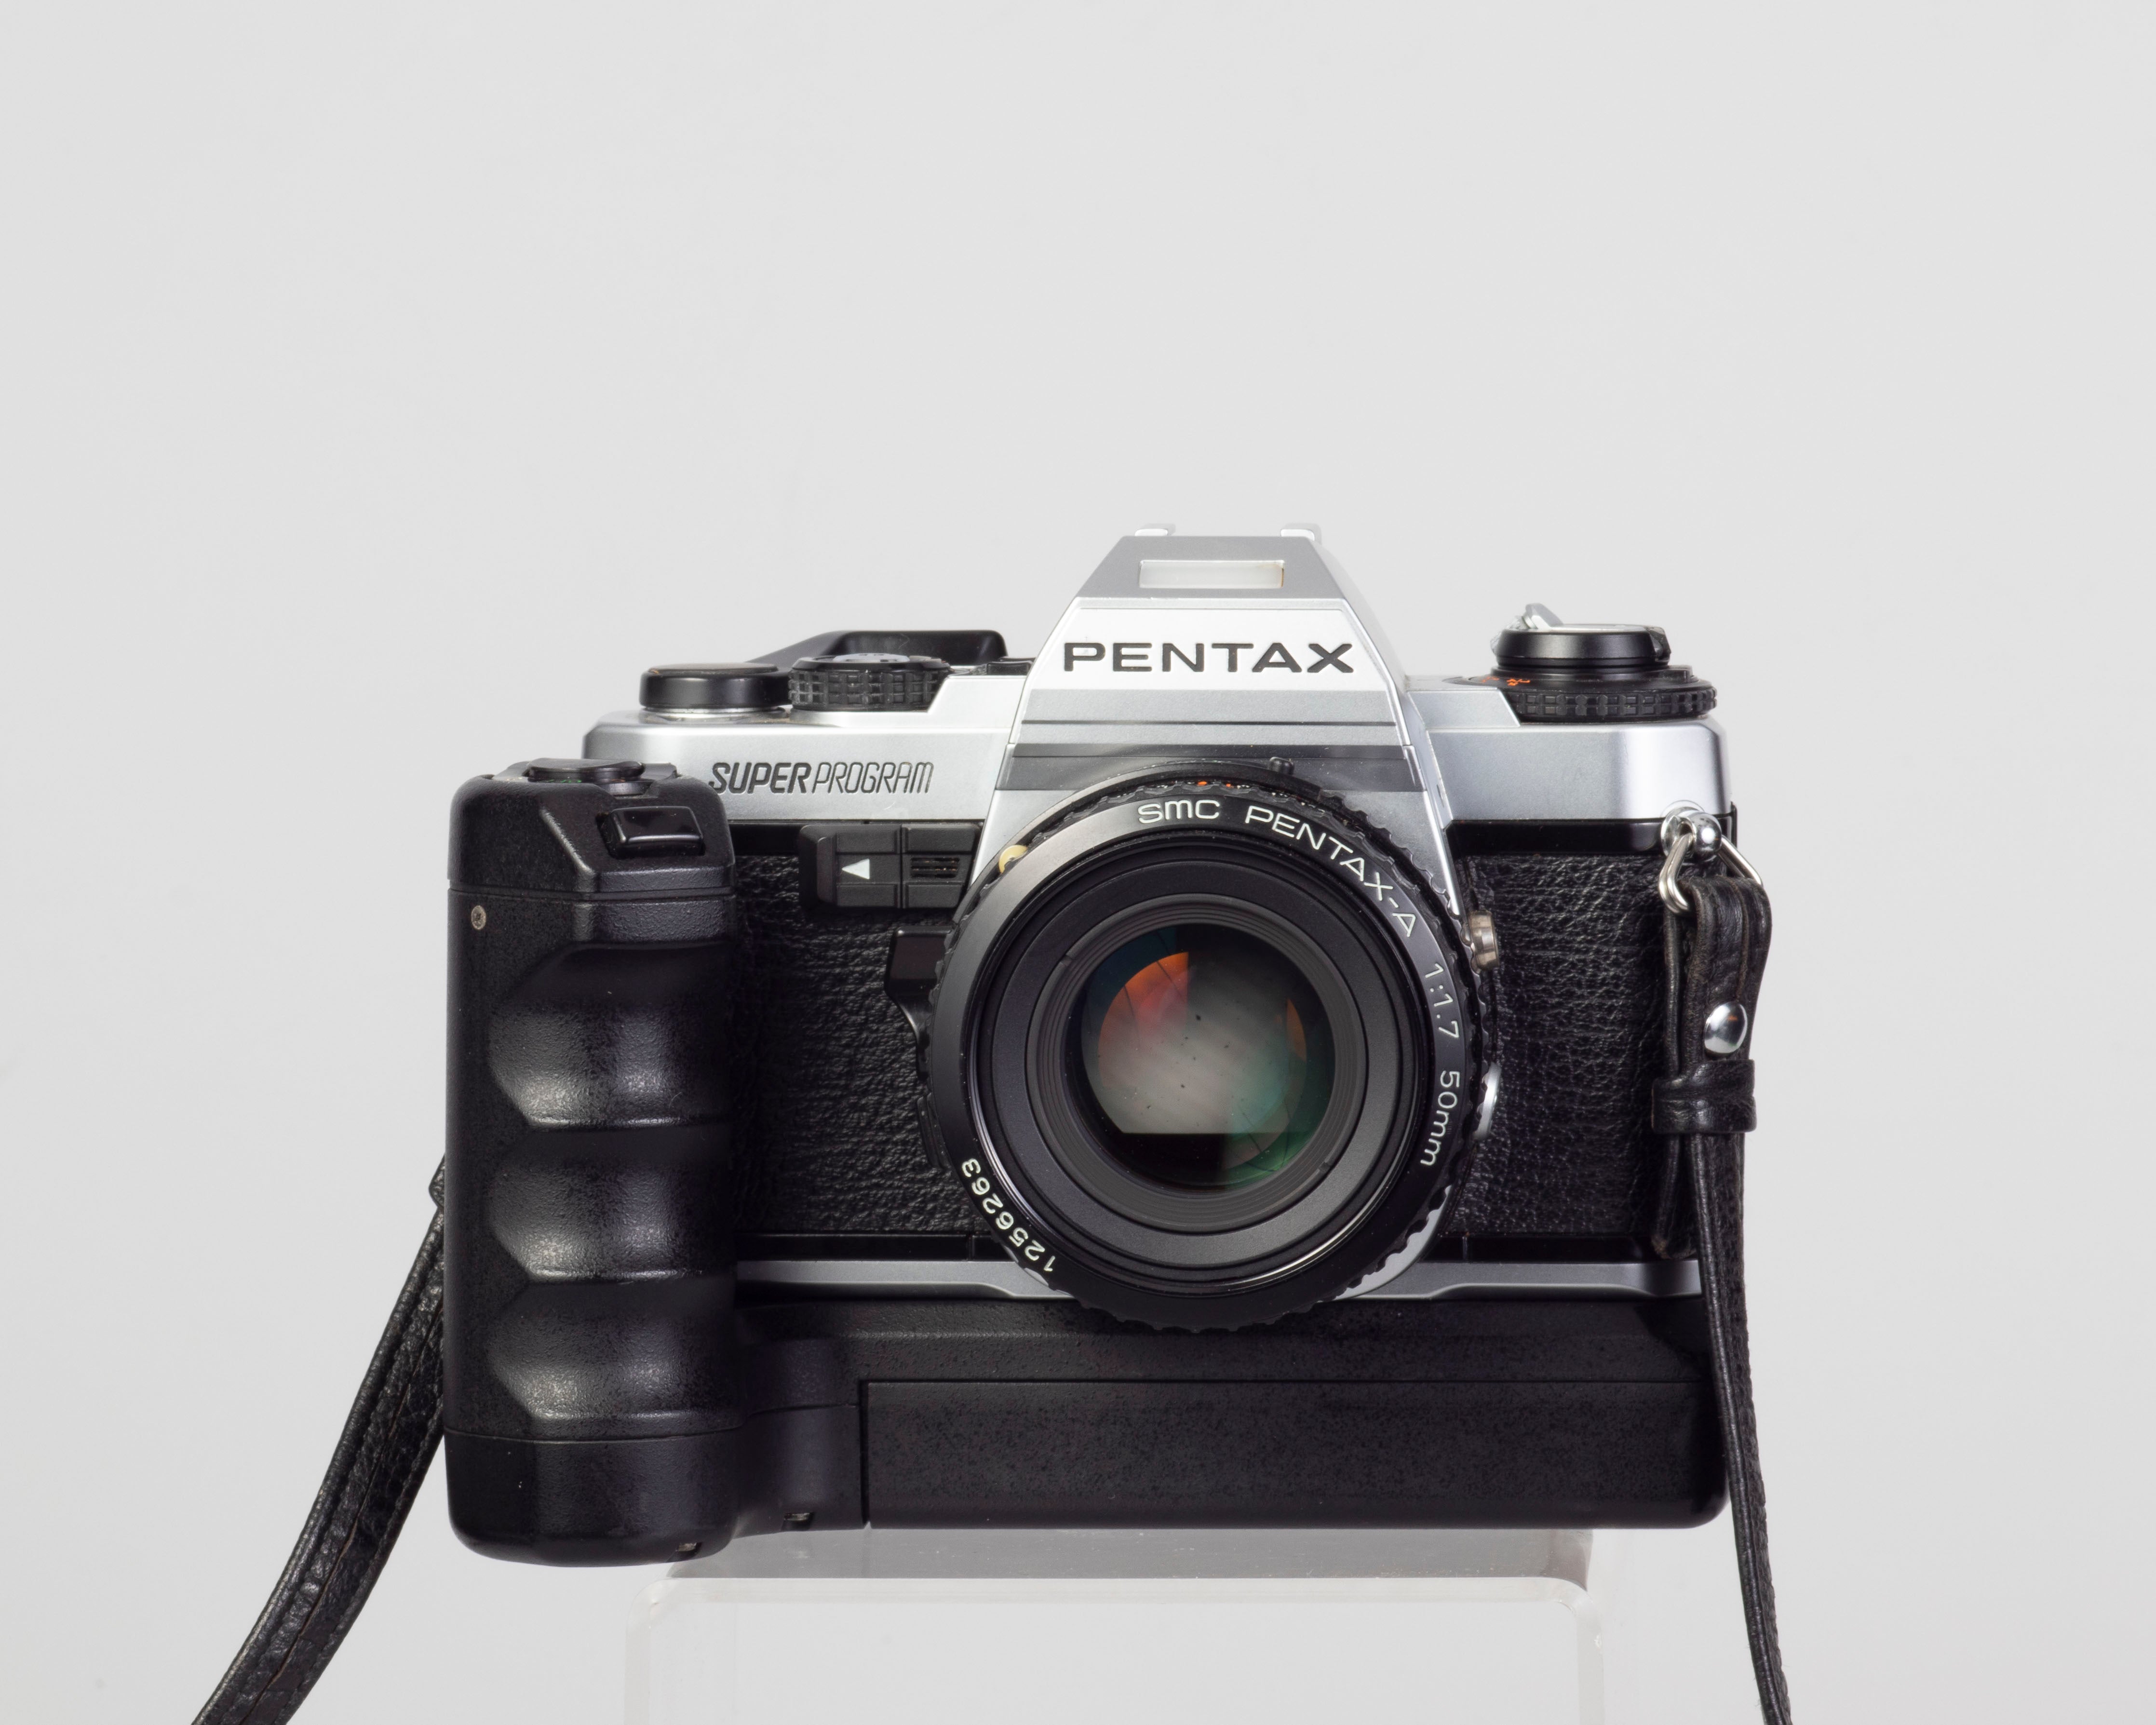 Pentax Super Program 35mm film SLR w/ SMC Pentax A 50mm f1.7 lens